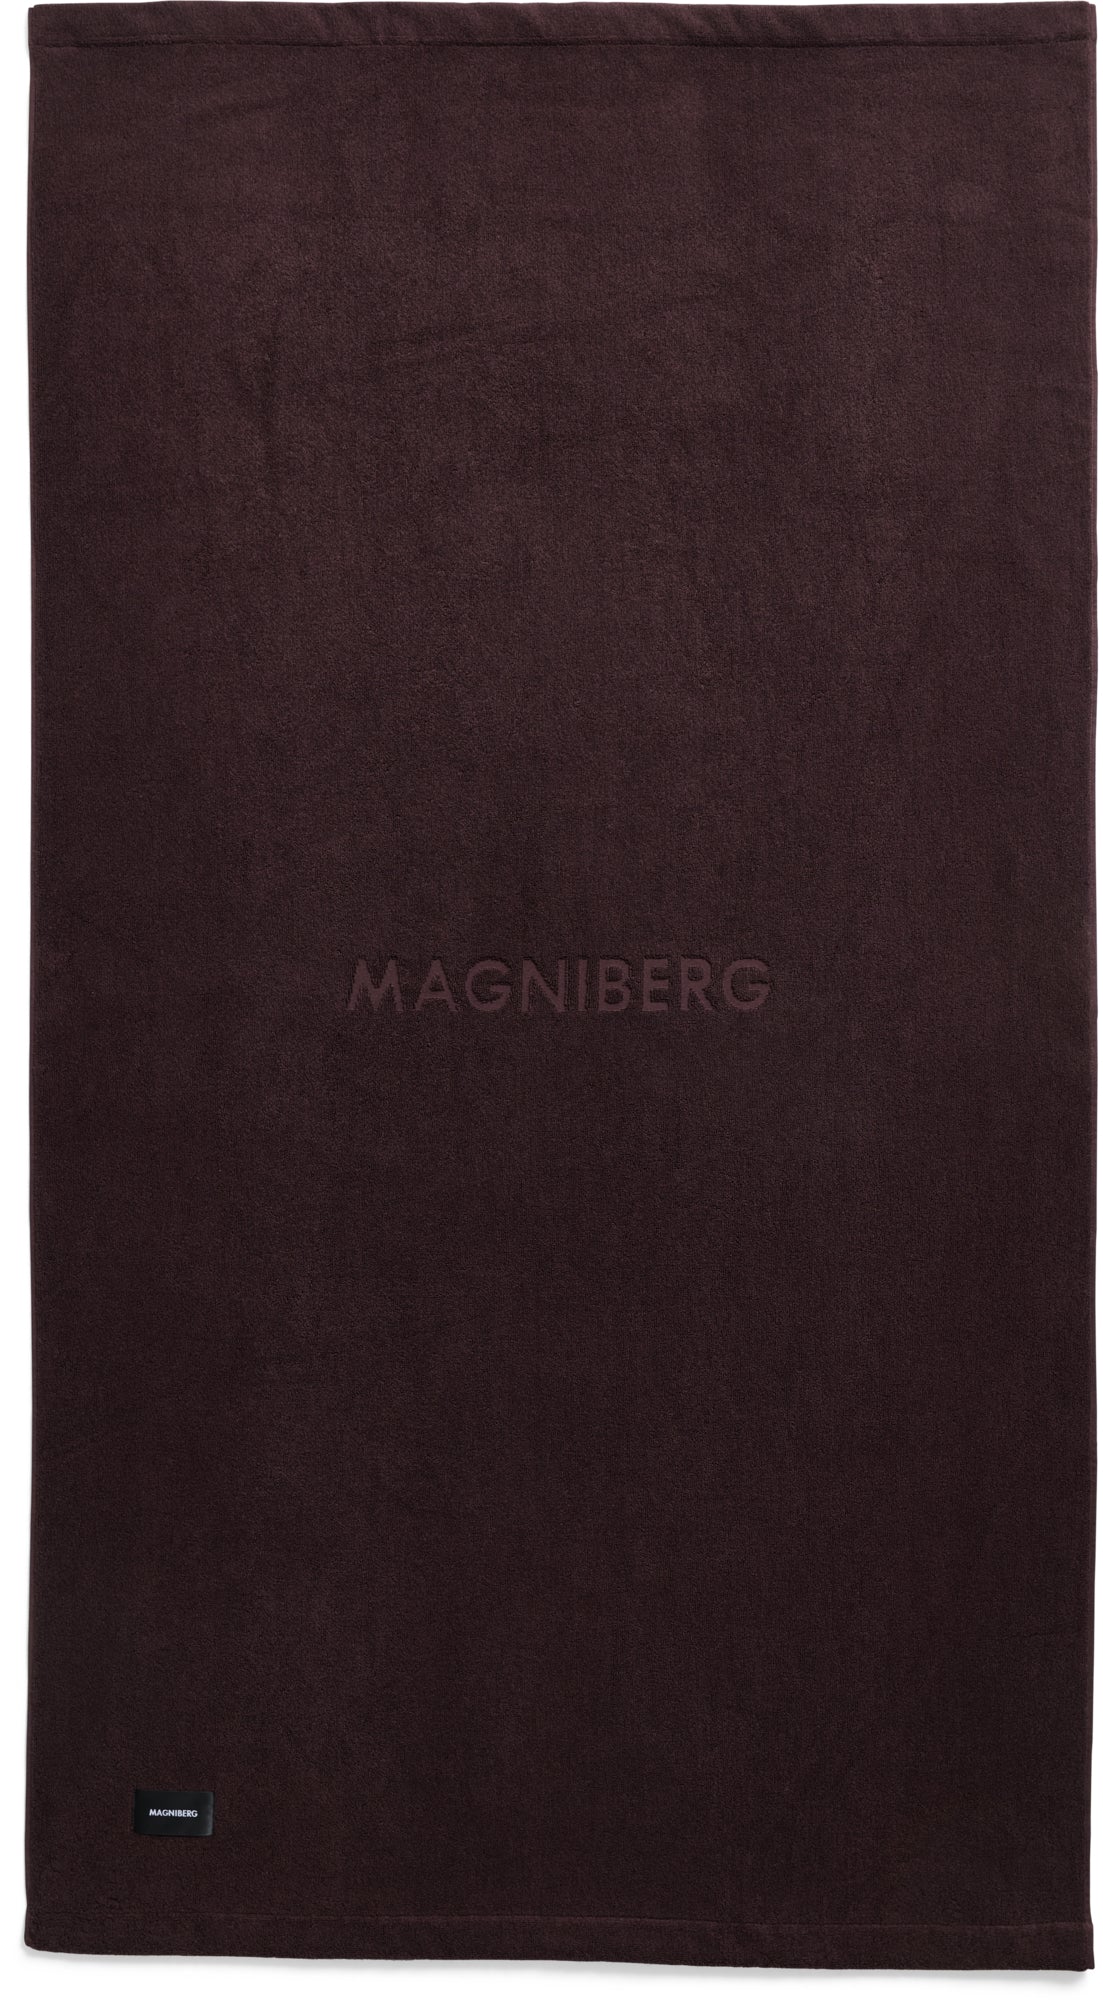 Magniberg - Gelato Håndklæder - Cherry Brown